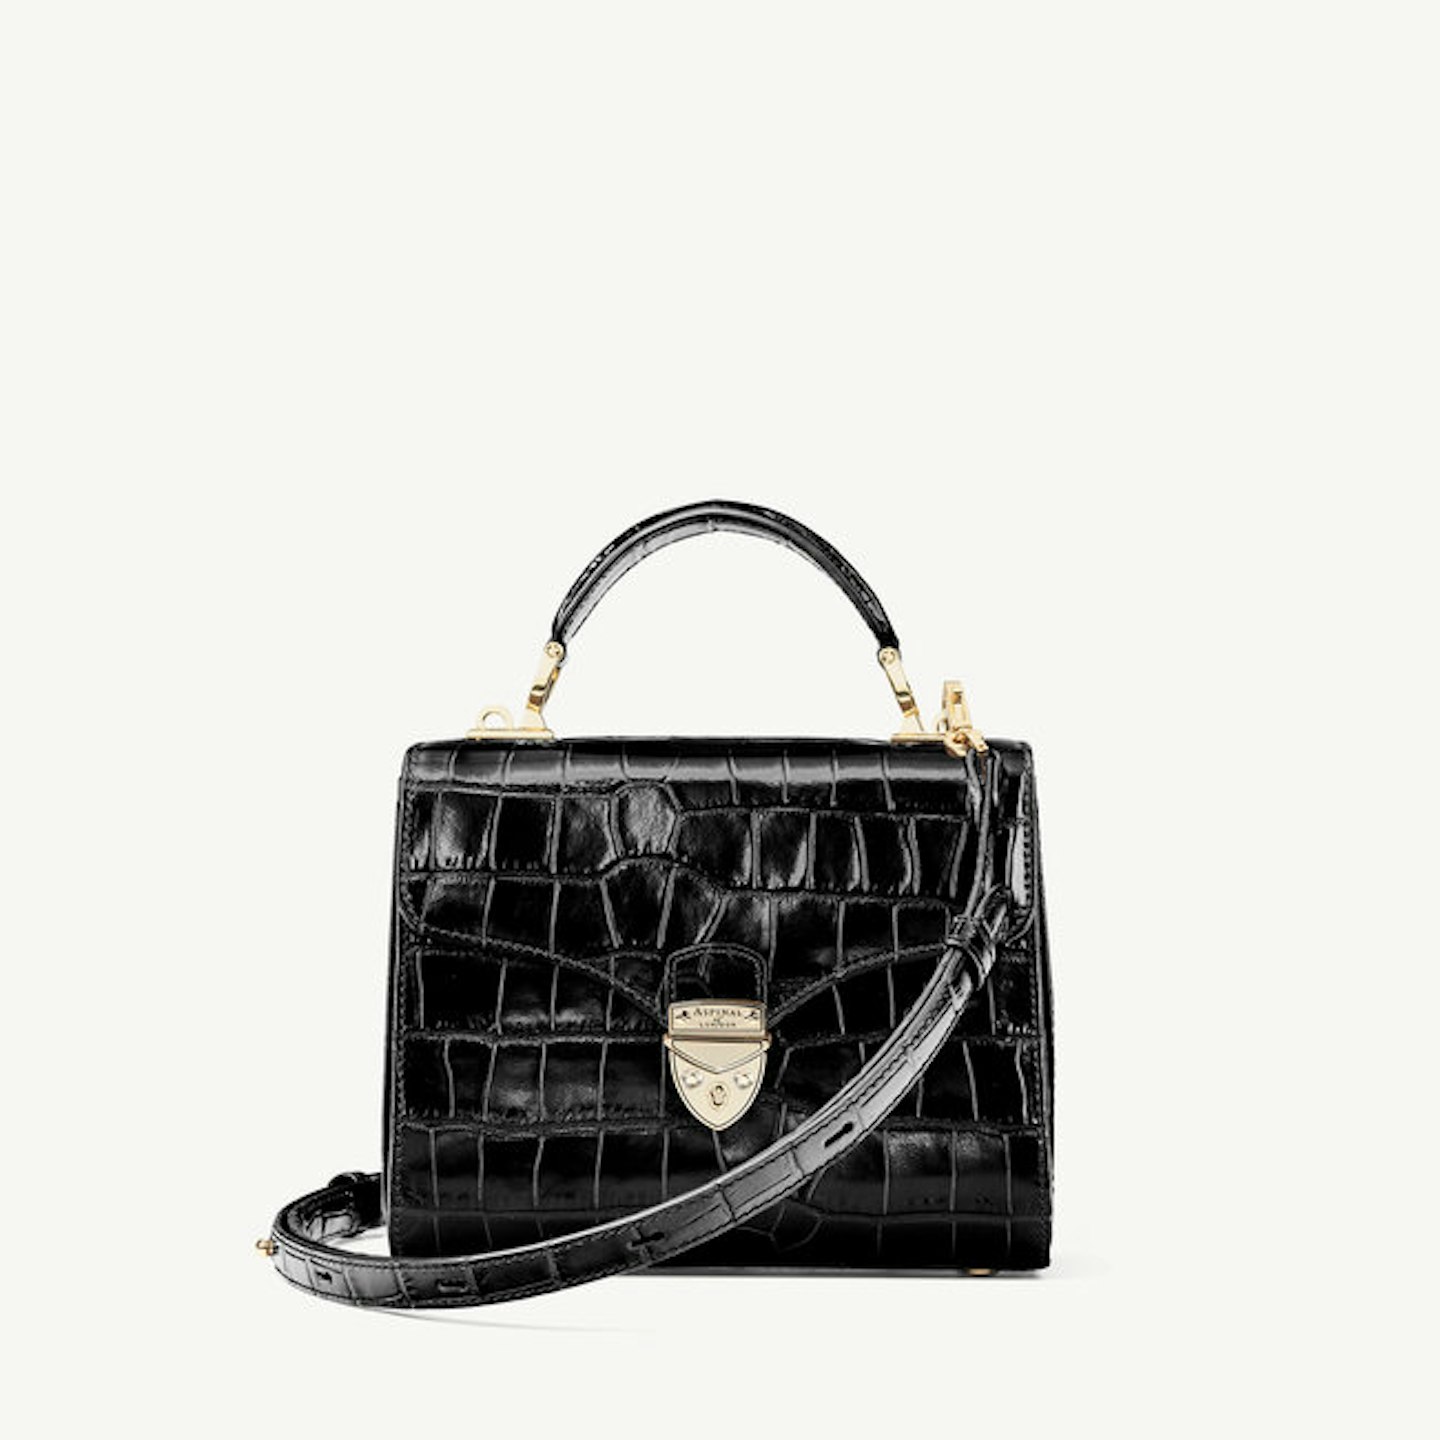 Aspinal, Mayfair Bag, £595